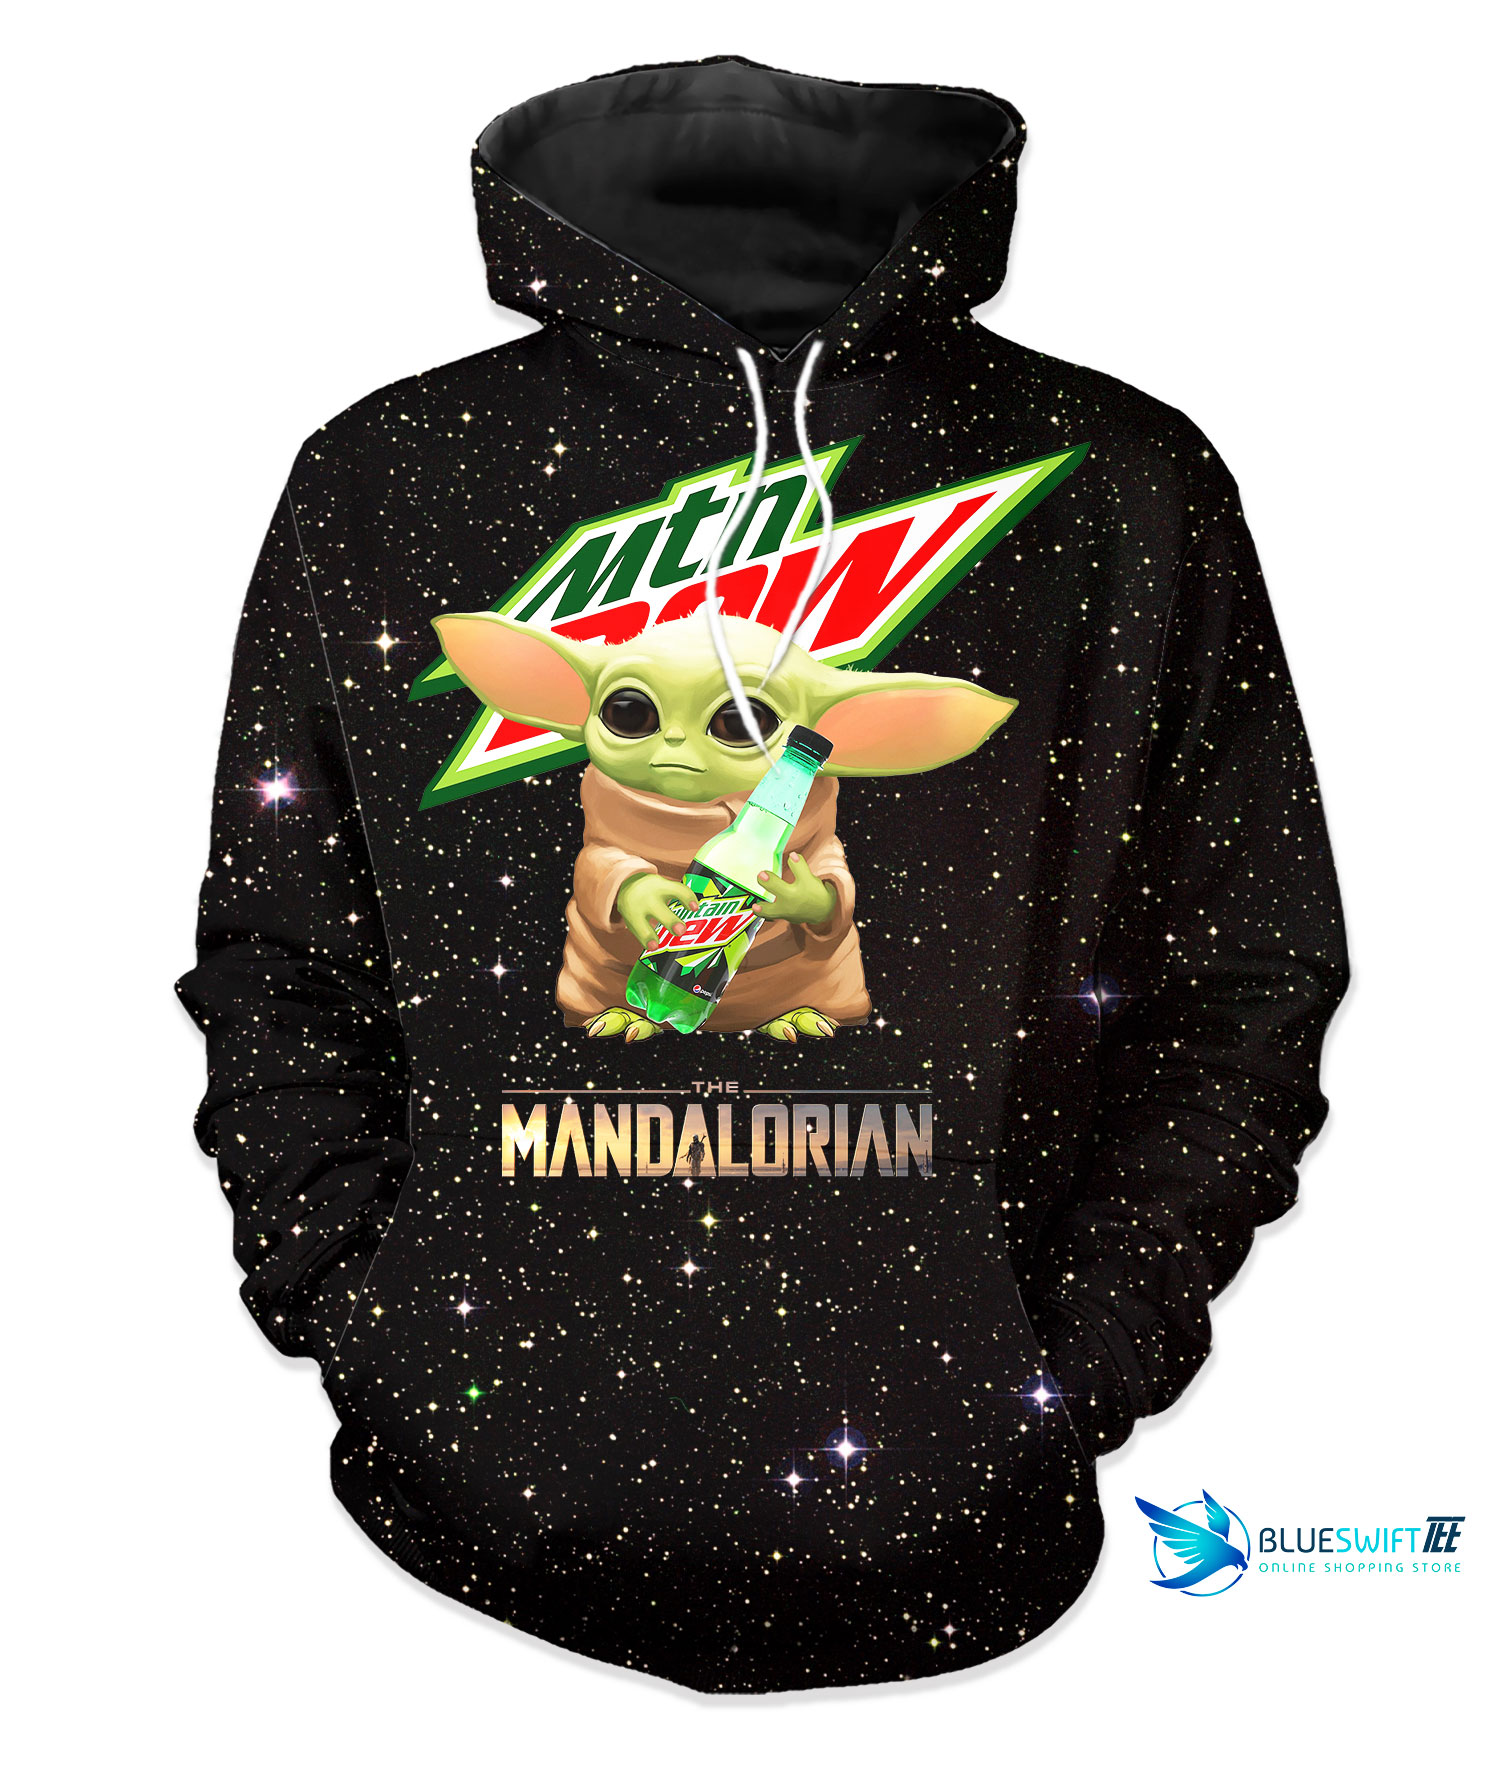 Baby Yoda hug Mountain Dew 3D The Mandalorian All Over Printed Hoodie